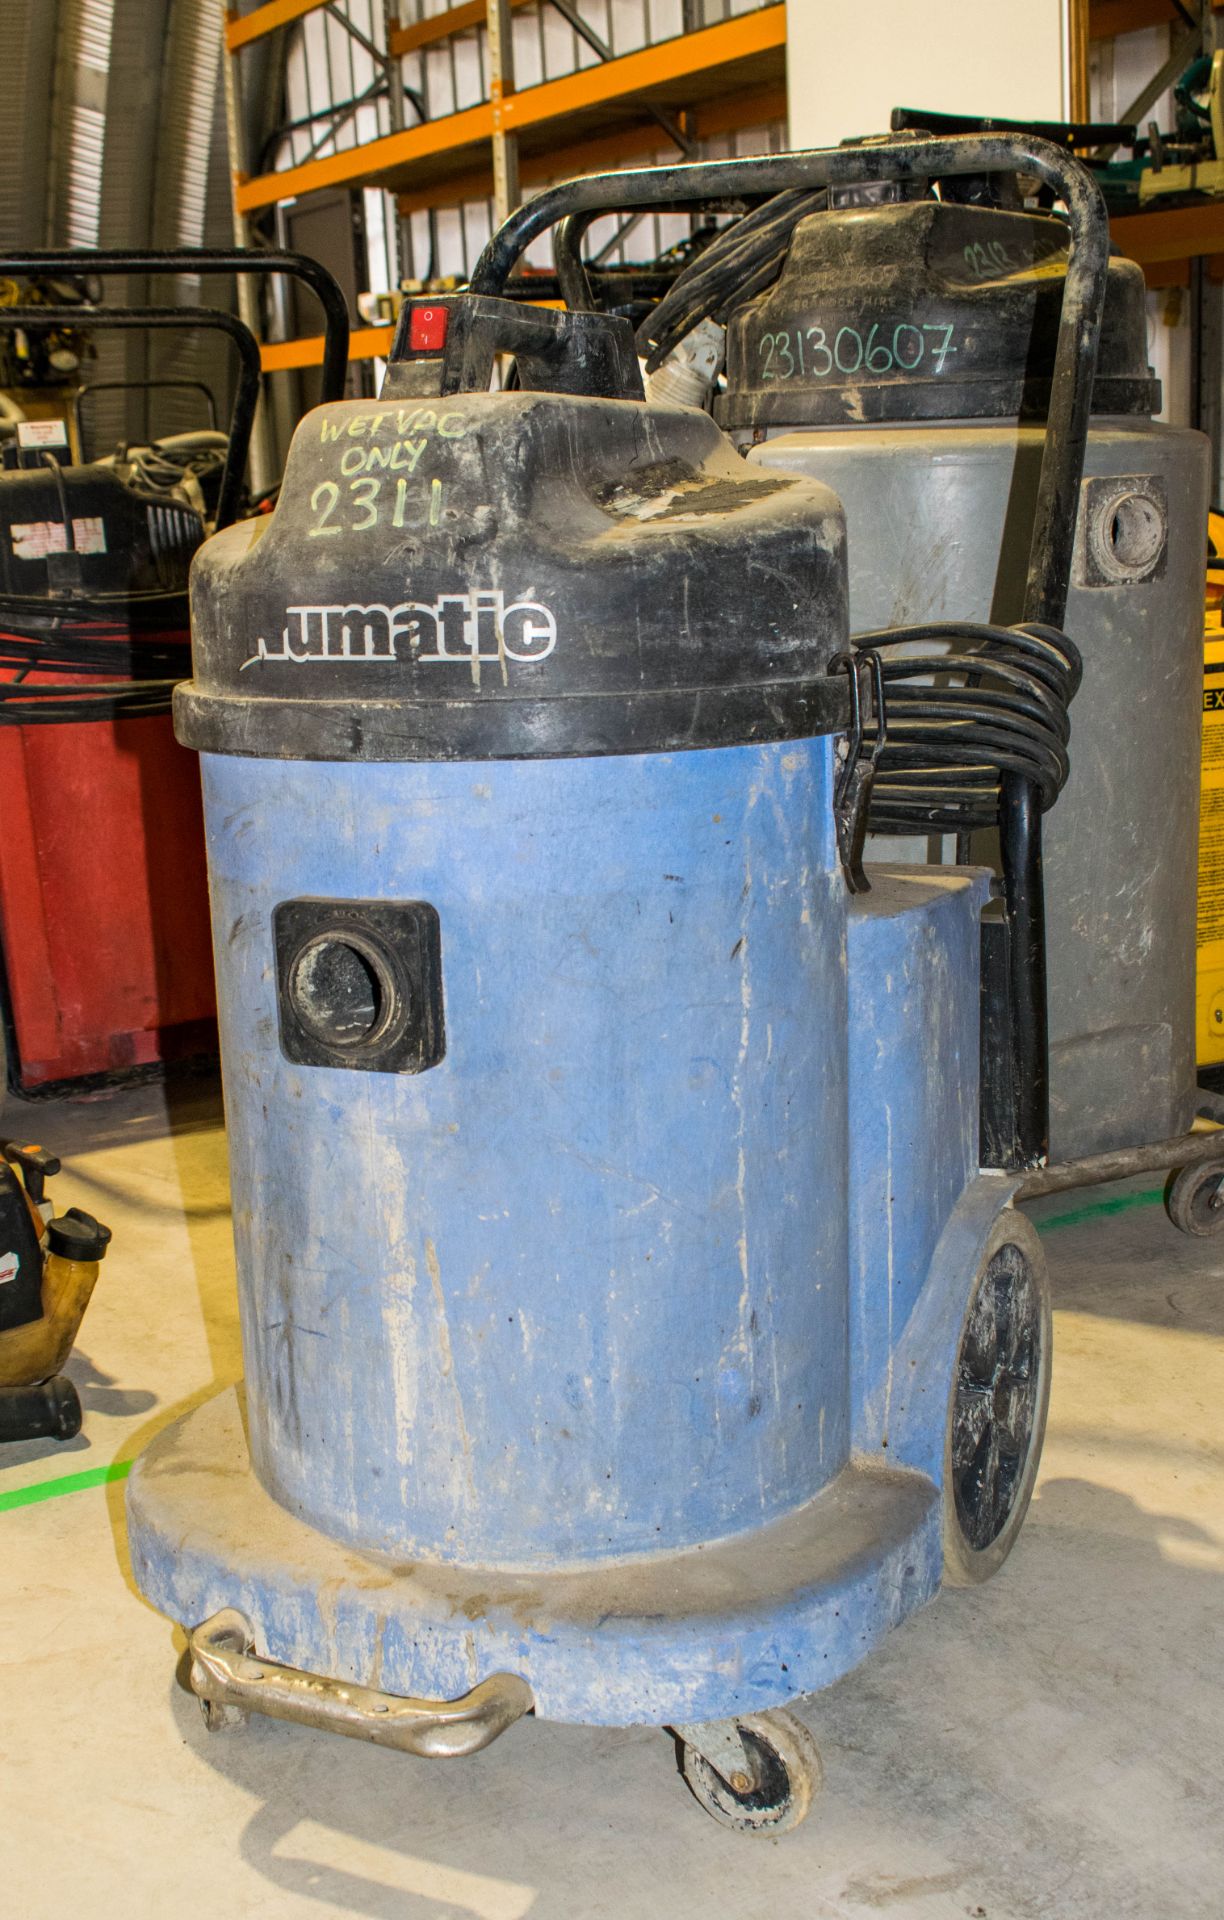 Numatic 110v vacuum cleaner